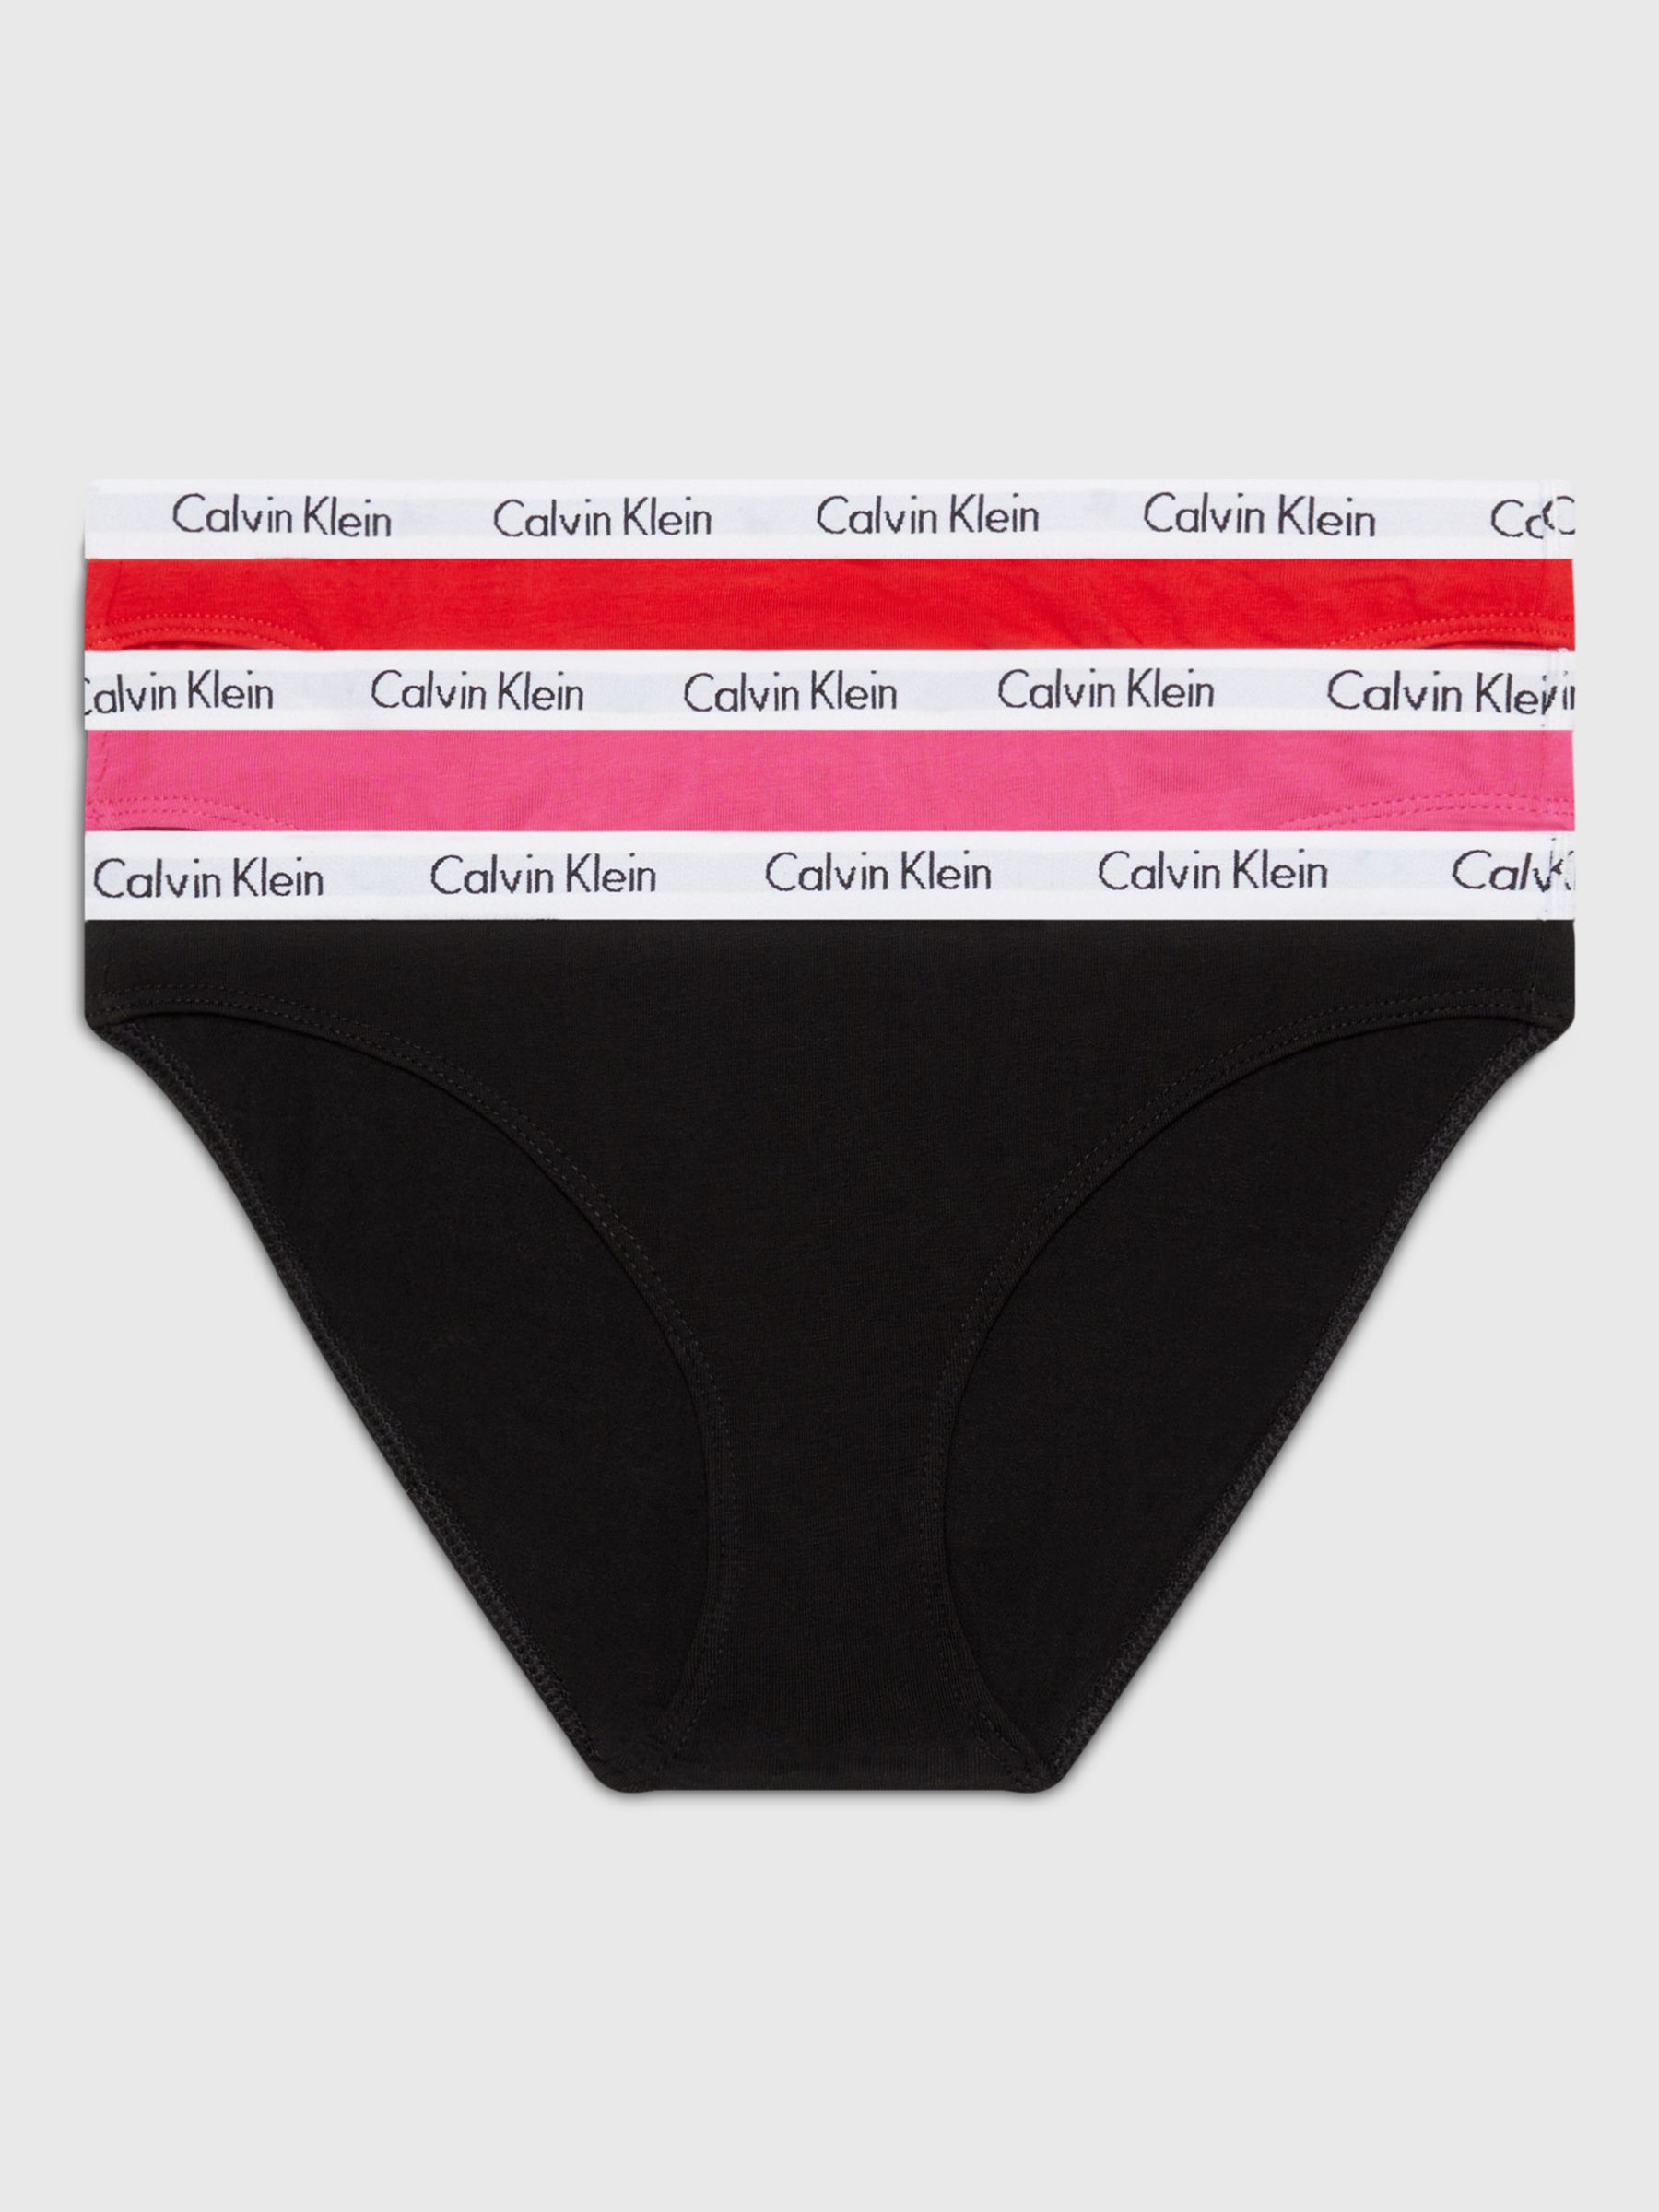 Calvin Klein Carousel Bikini Knickers, Pack of 3, Black/Rouge/Fuchsia at  John Lewis & Partners